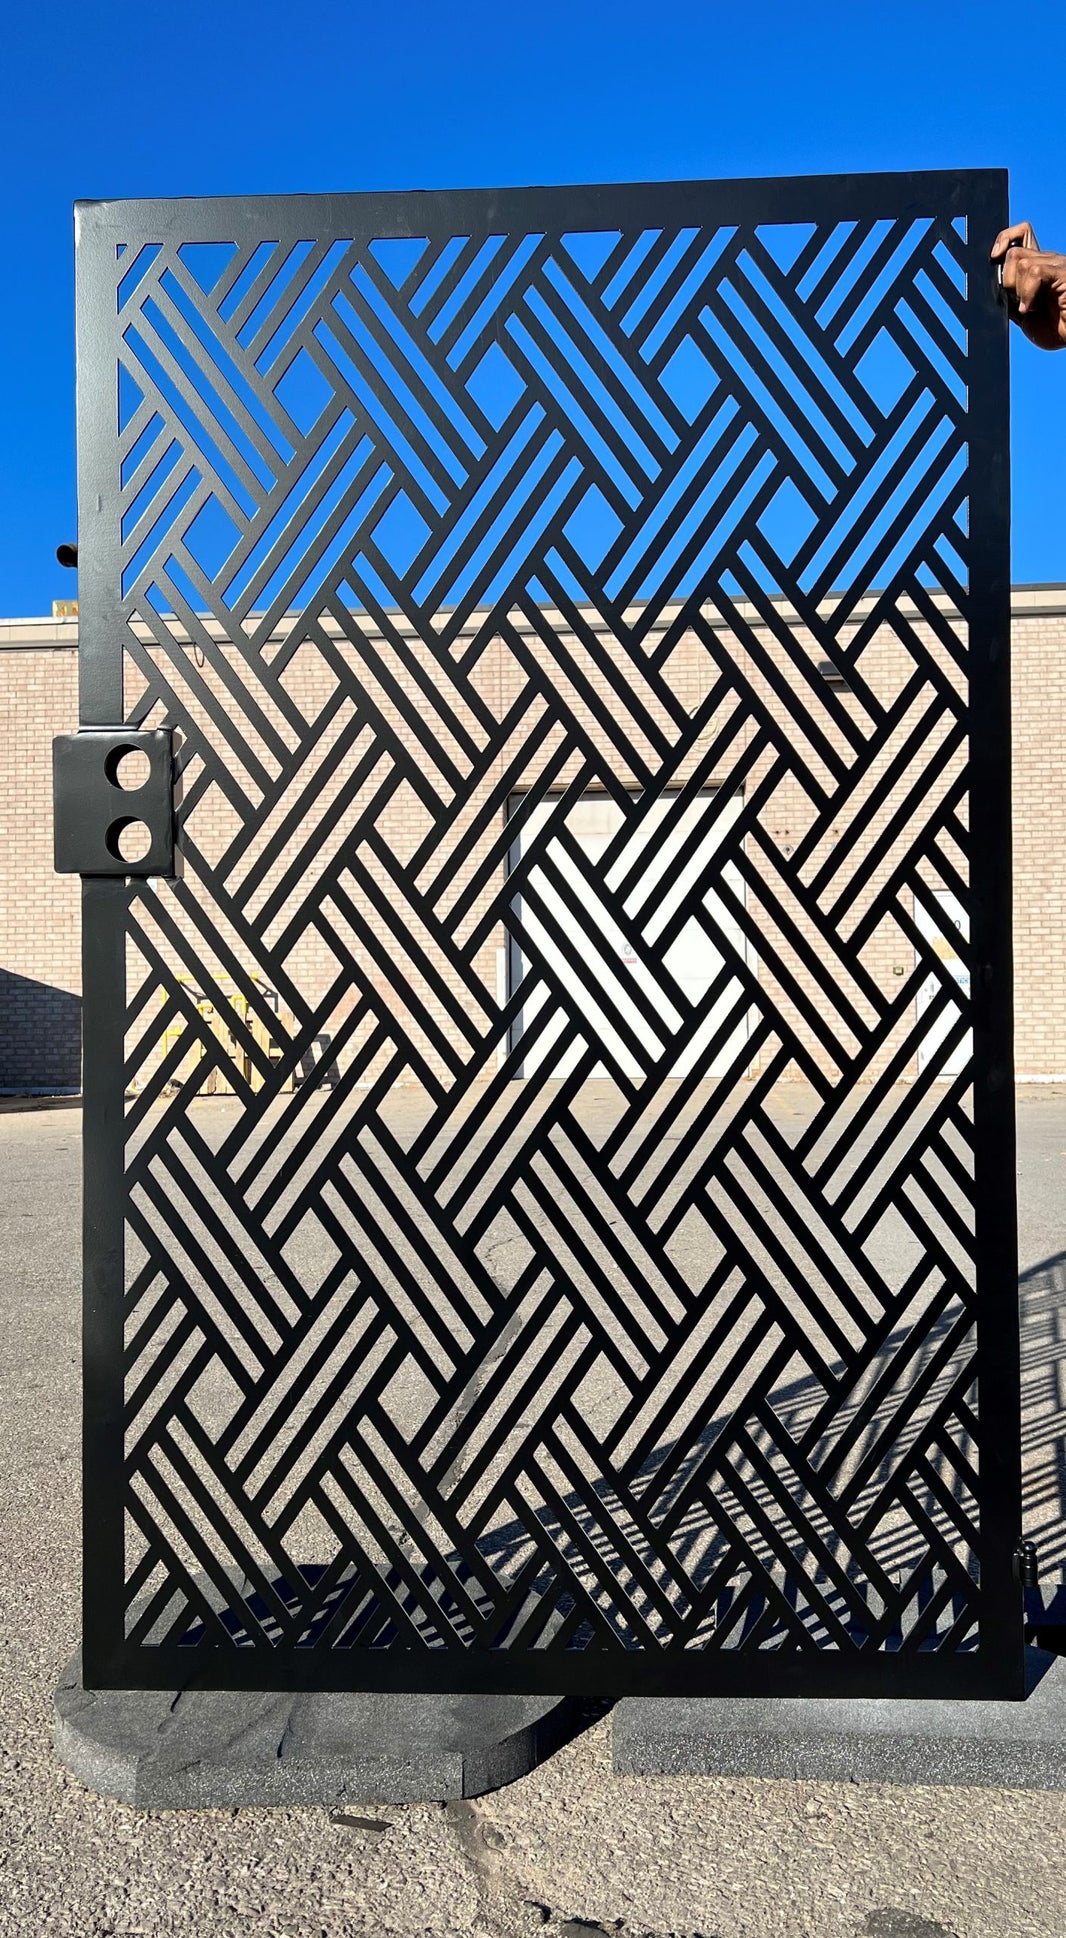 Laser Cut Artistic Criss Cross Design Metal Back Yard Gate| Modern Fabrication Metal Pool Gate | Made in Canada – Model # 721